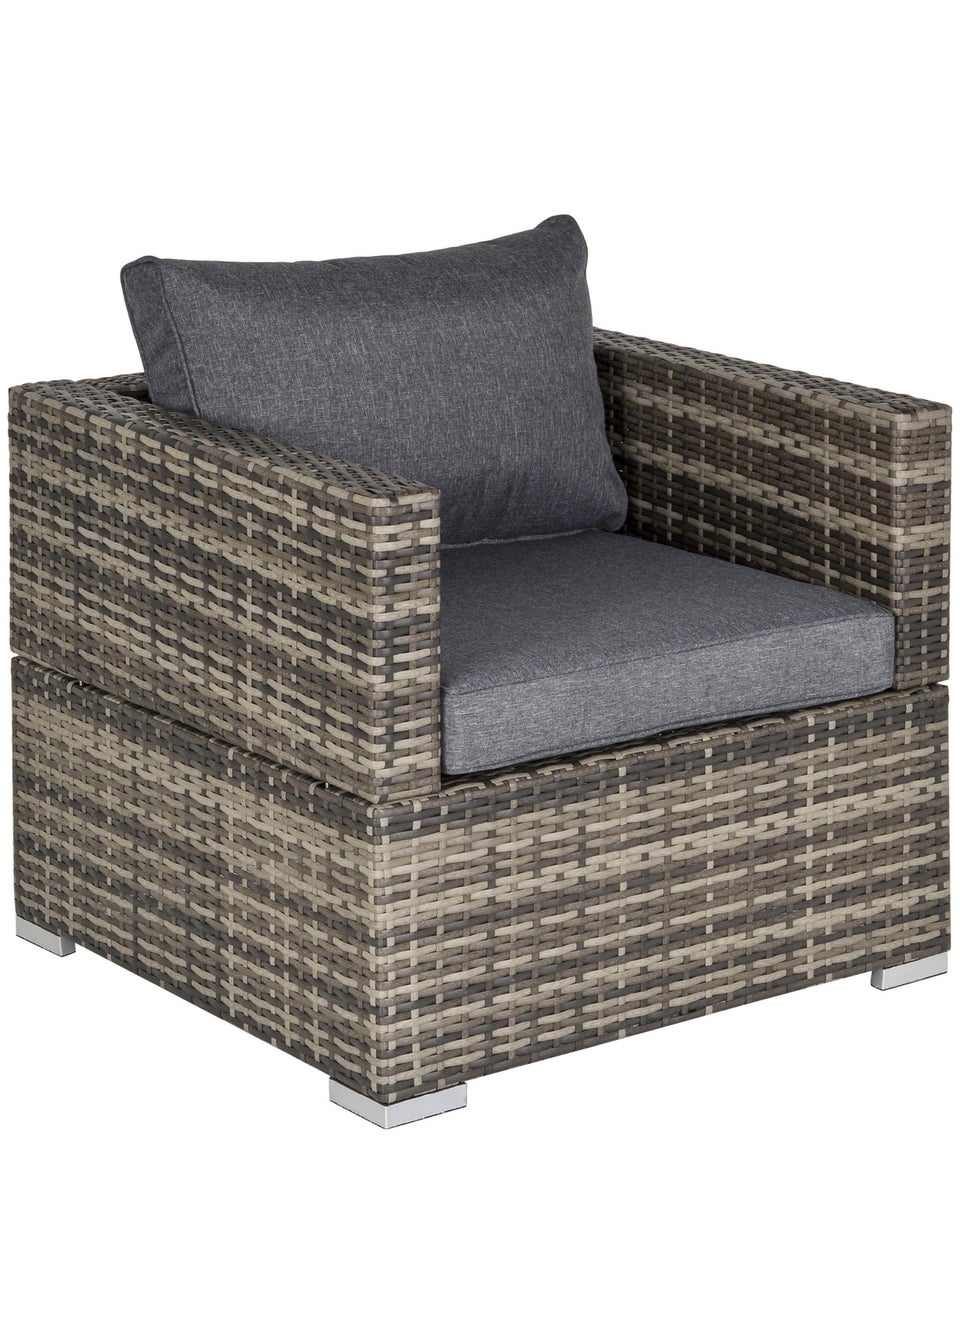 Outsunny Single Seater Rattan Chair Sofa - Dark Grey